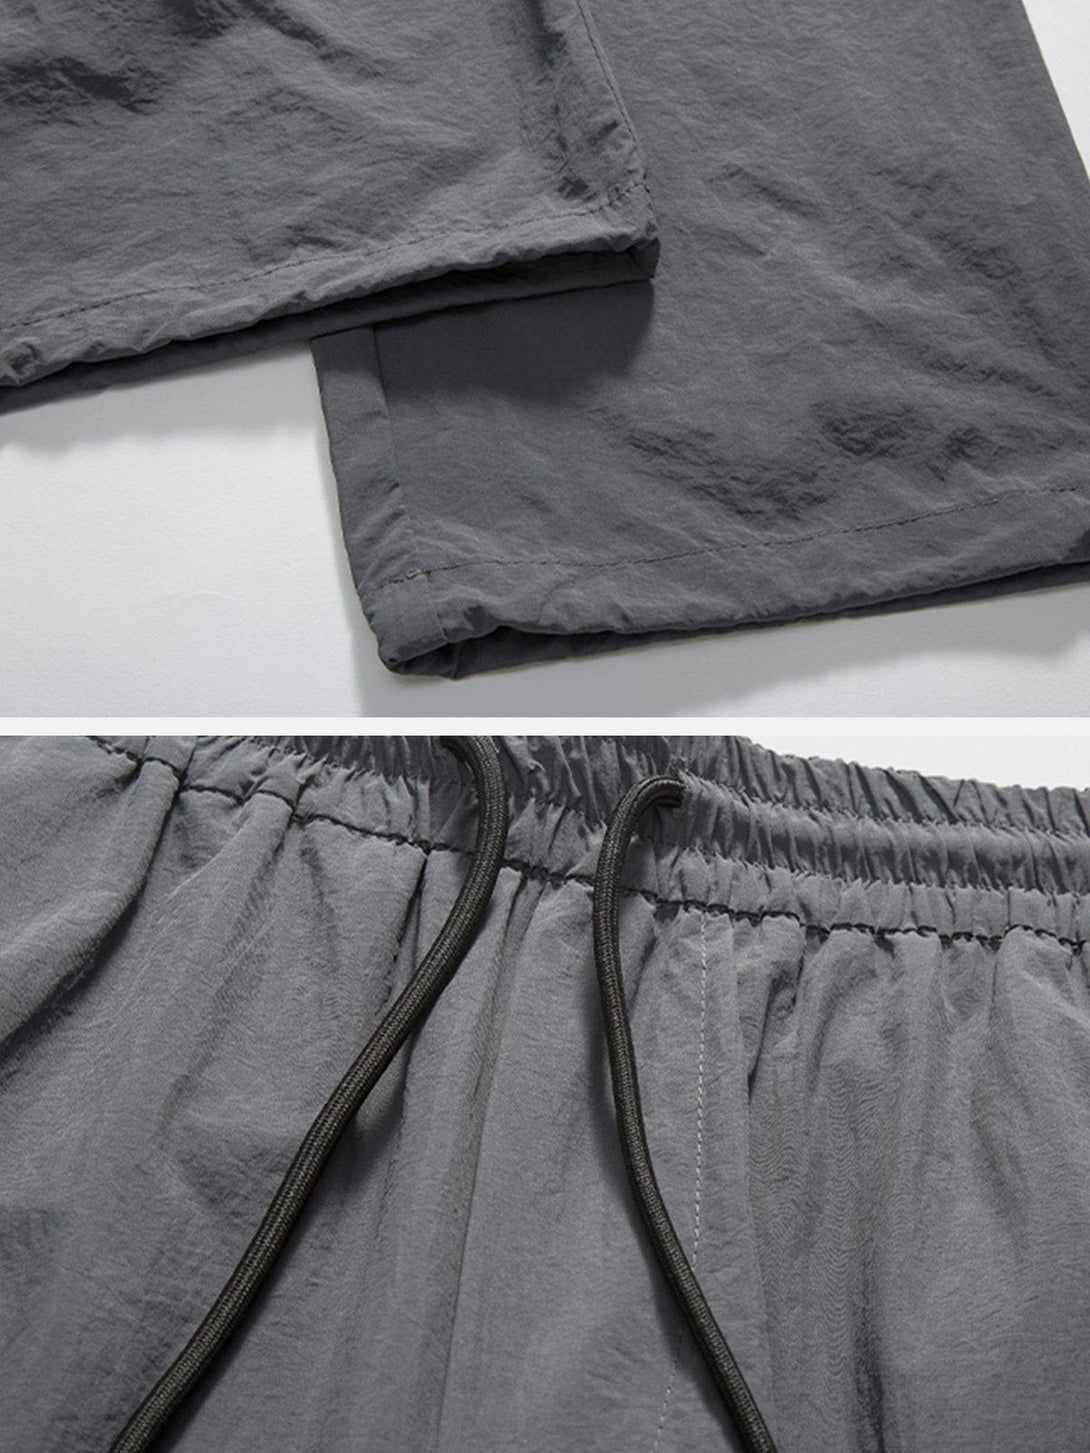 Majesda® - Zip Multi-Pocket Cargo Pants outfit ideas streetwear fashion